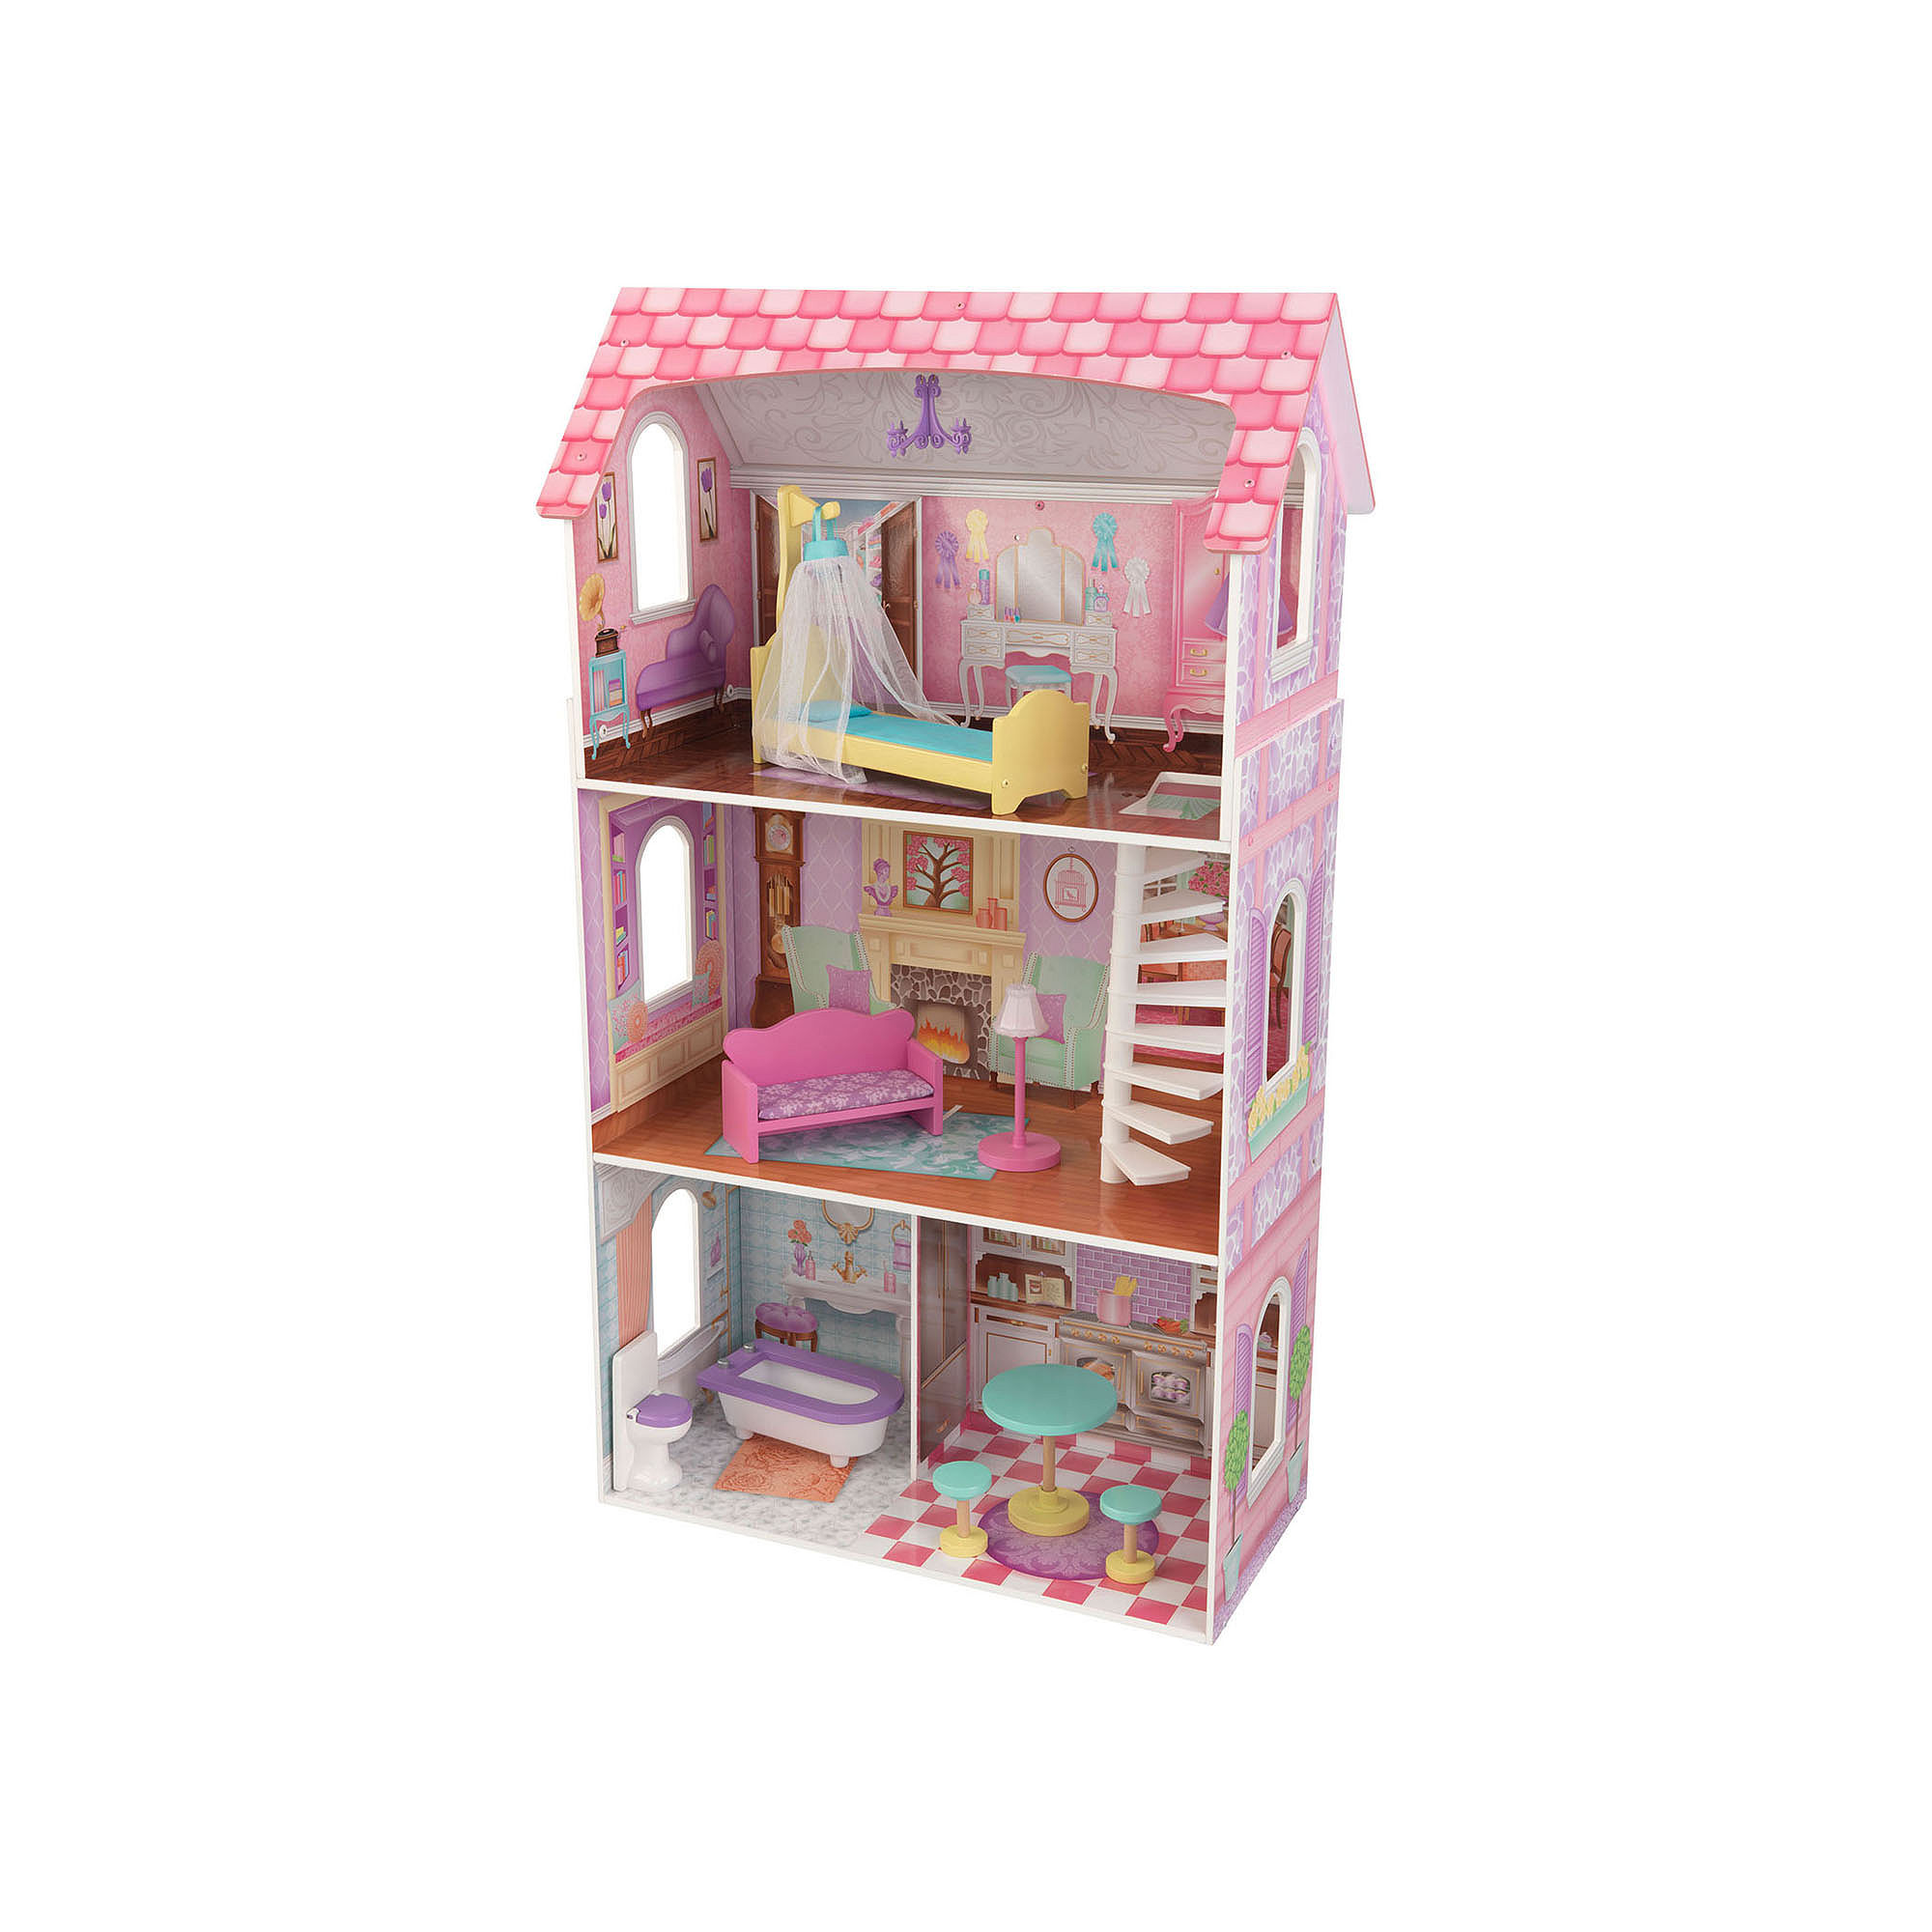 KidKraft Penelope Dollhouse with Furniture